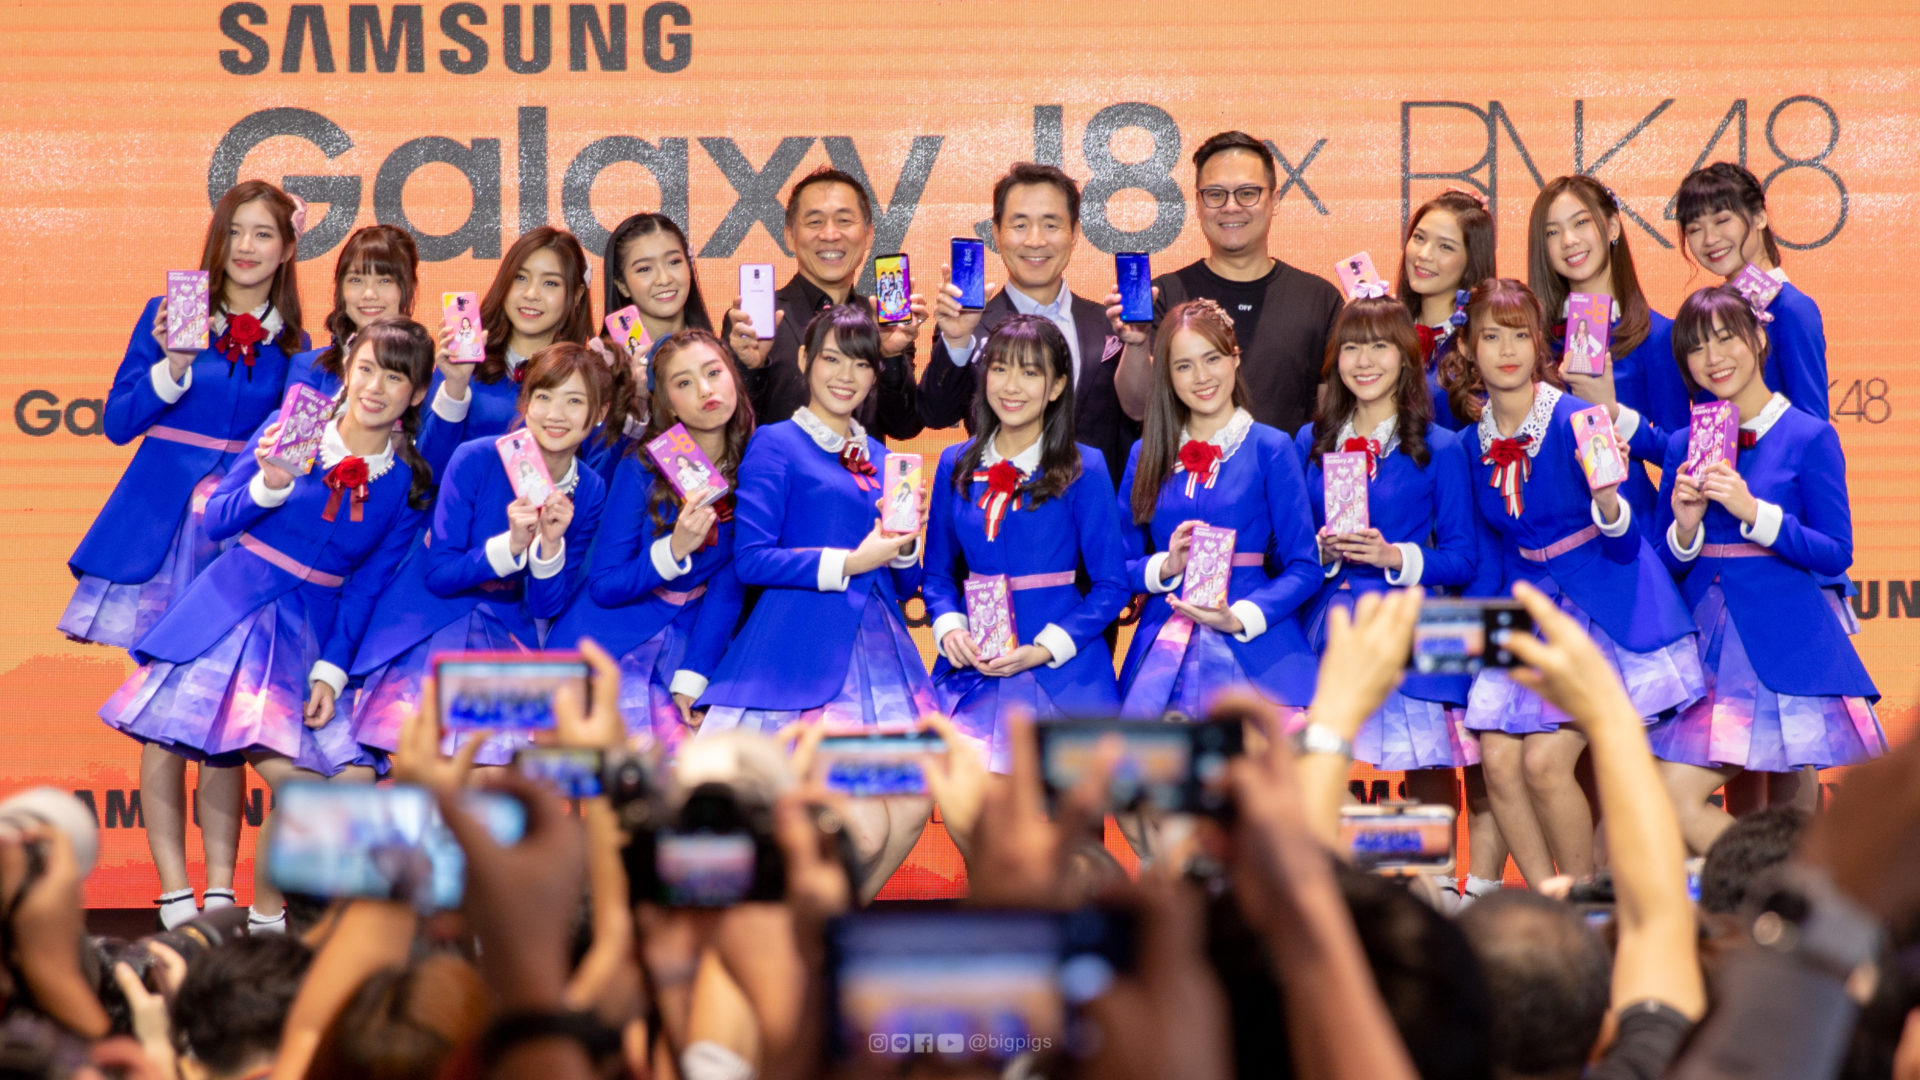 SAMSUNG ควงแขน BNK48 เป็น Brand Ambassador เปิดตัว Galaxy J8 ไอดอลสมาร์ทโฟน [มีภาพ มีคลิป อิ่มจุใจ]